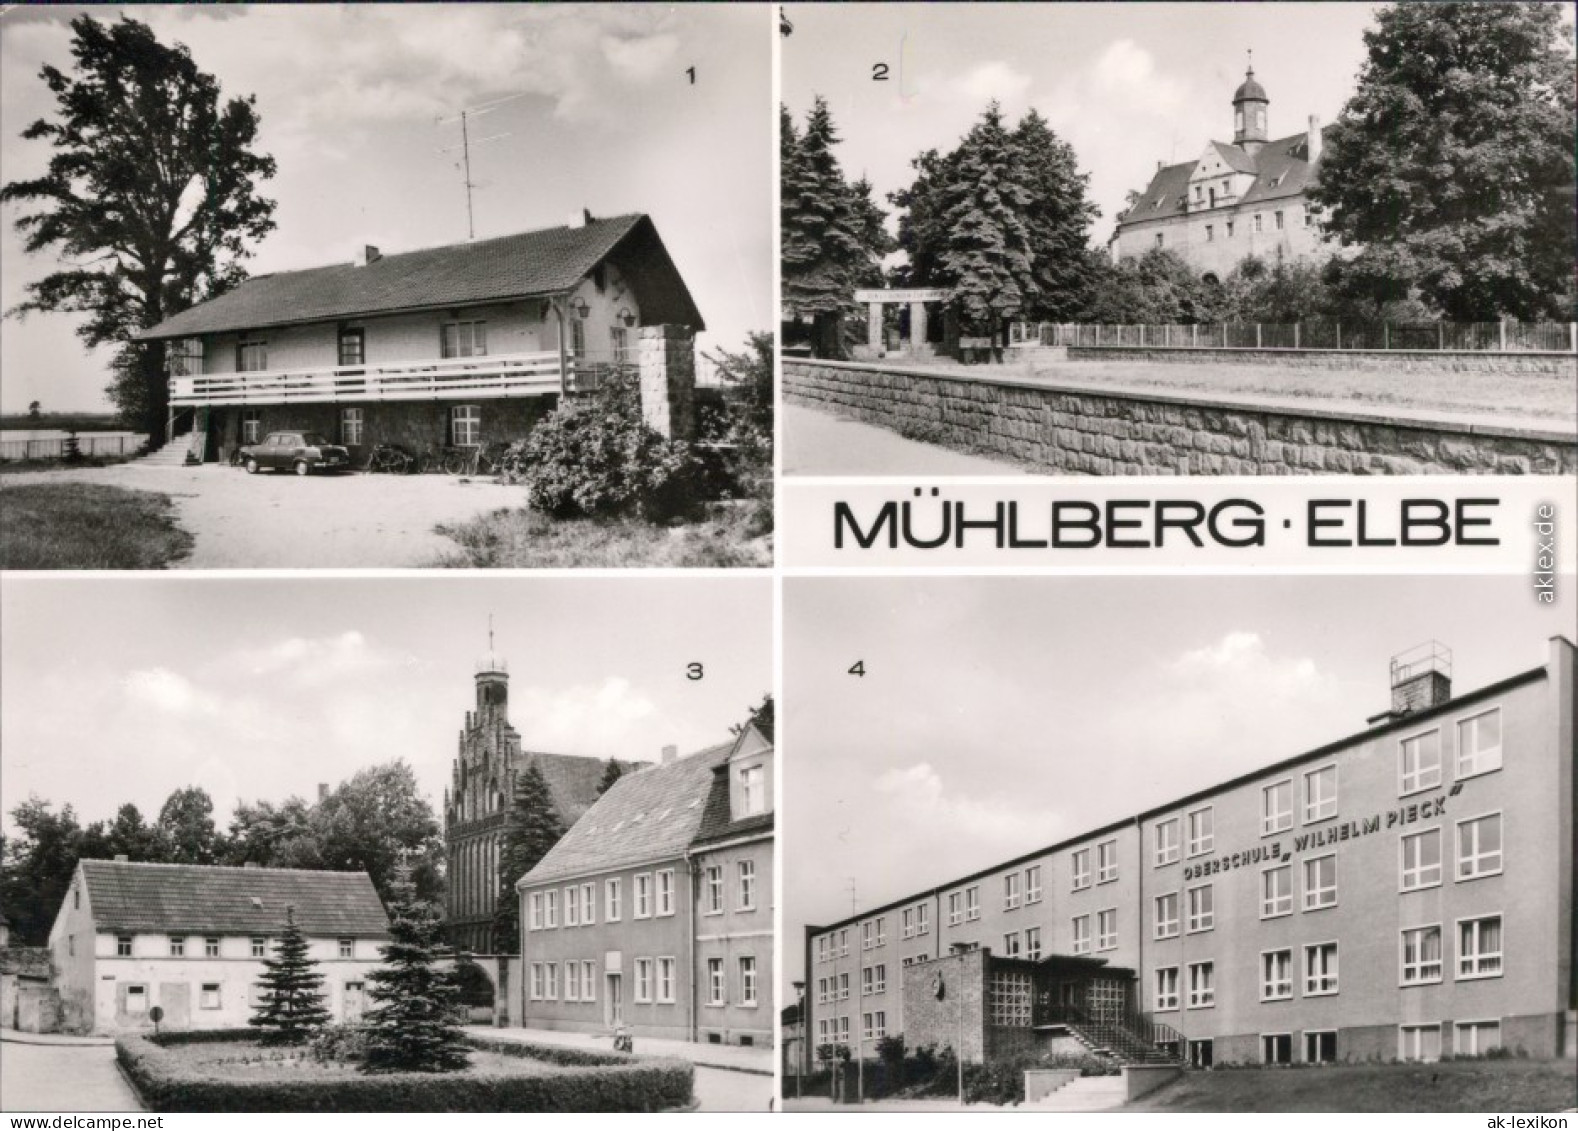 Mühlberg Elbe Miłota Klubgaststätte, Schloss, Thälmannplatz, Oberschule 1979 - Mühlberg